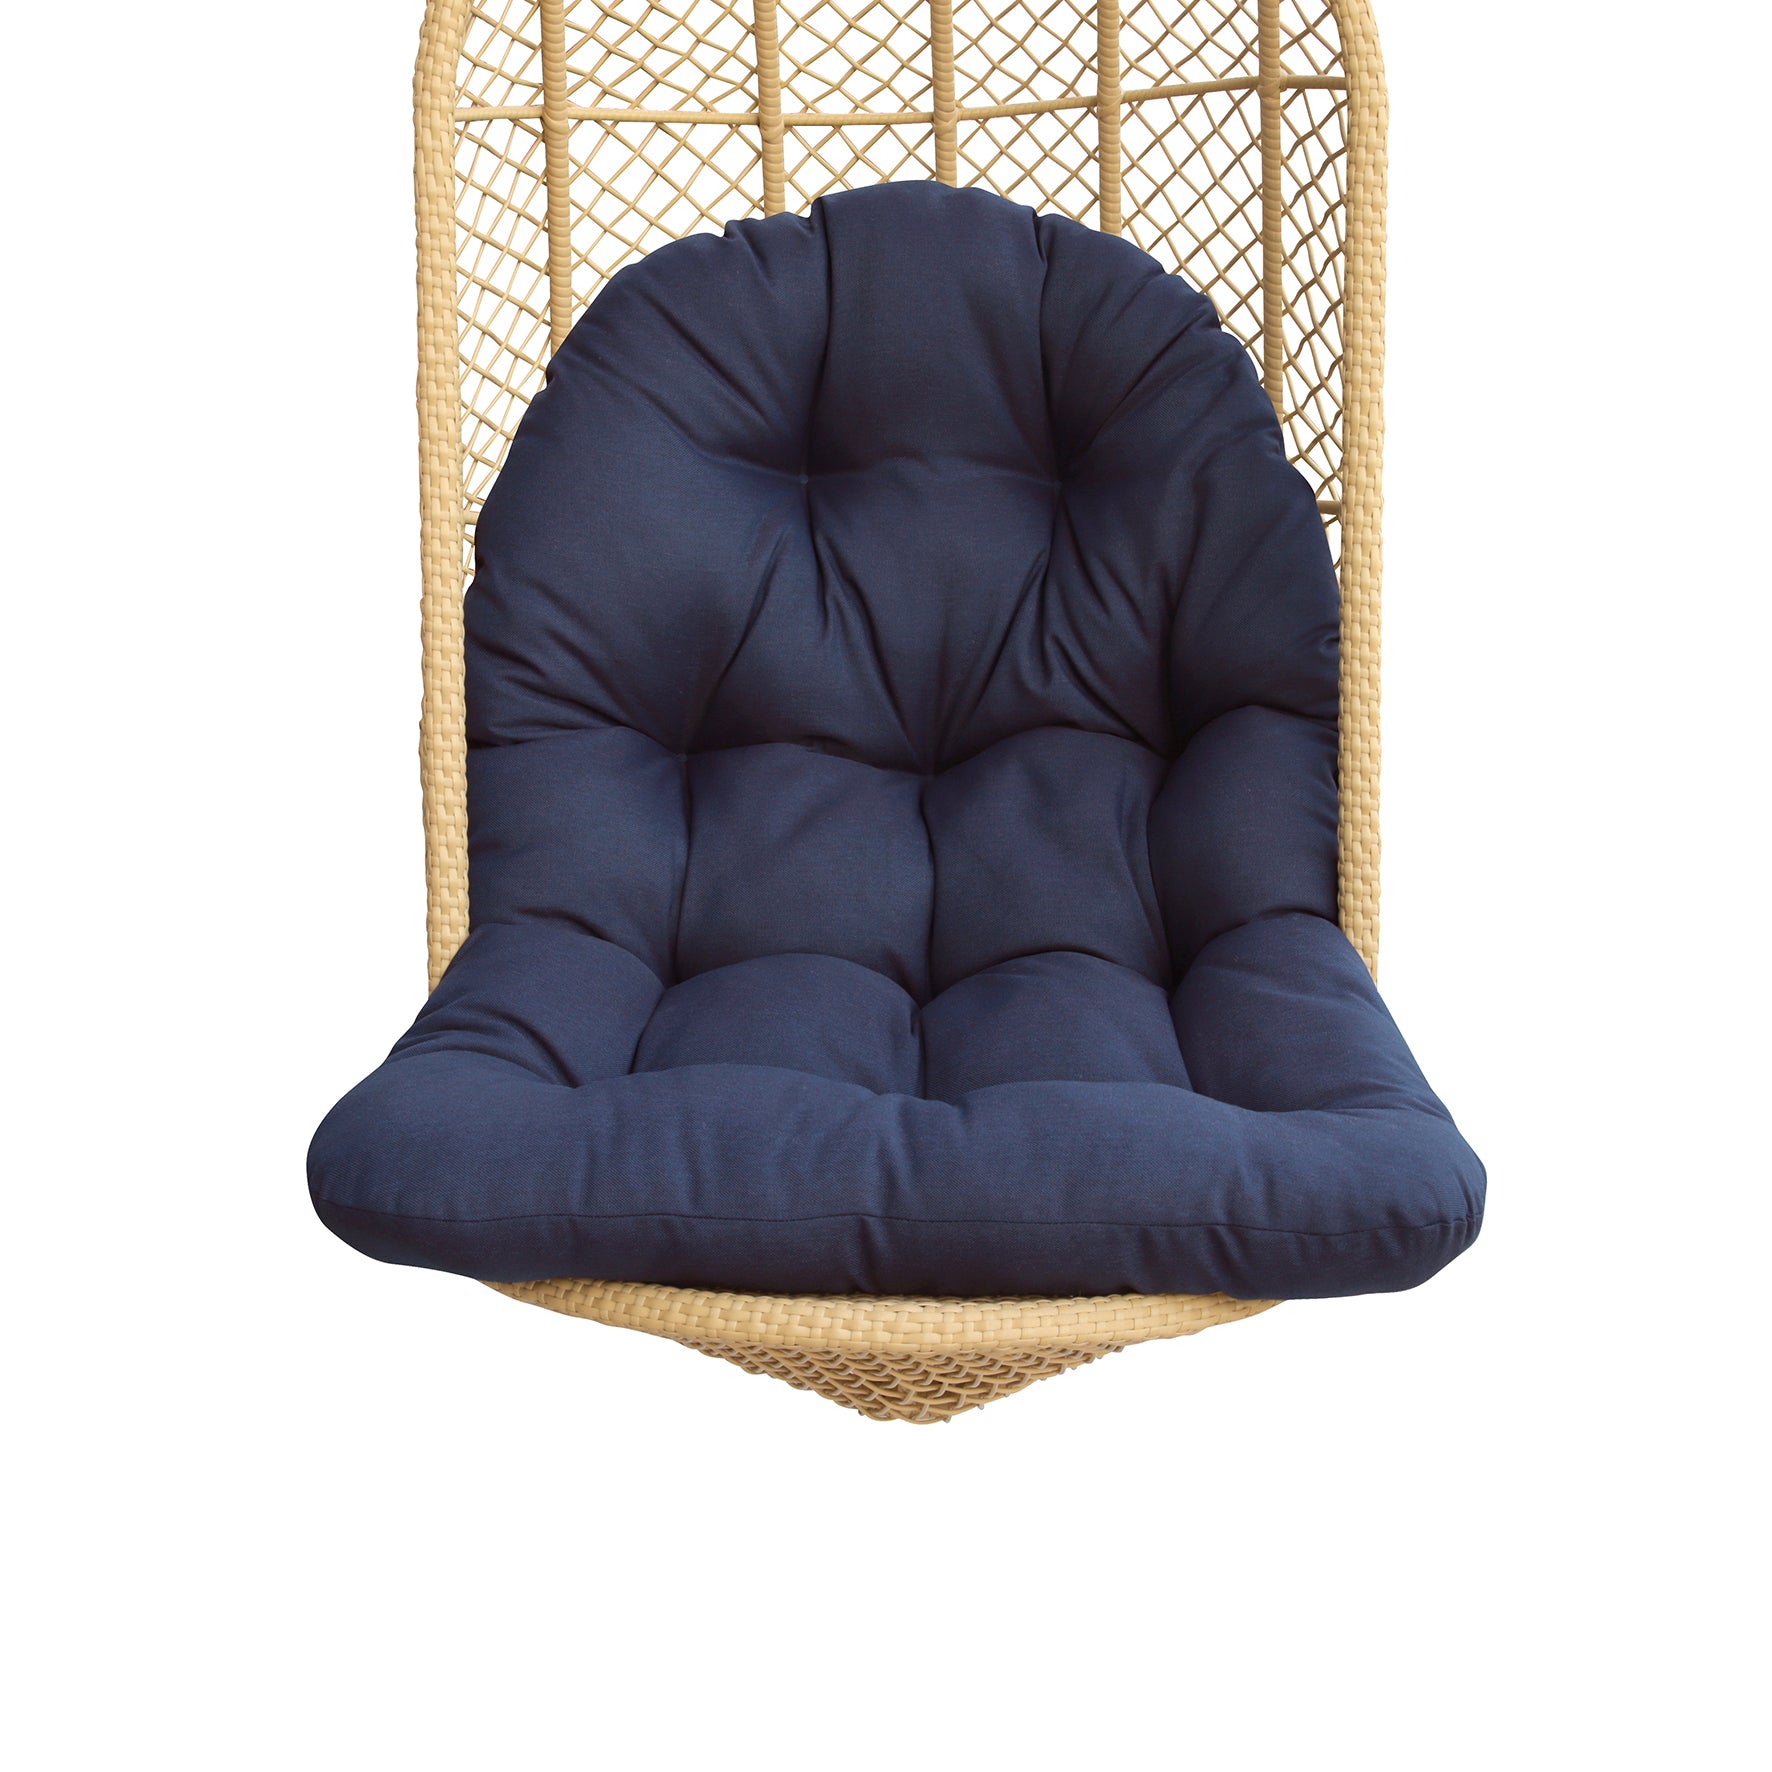 Patio Balcony Hanging Basket Chair Cushions Egg Chair Swing Chair Pads (Olefin Navy Blue)